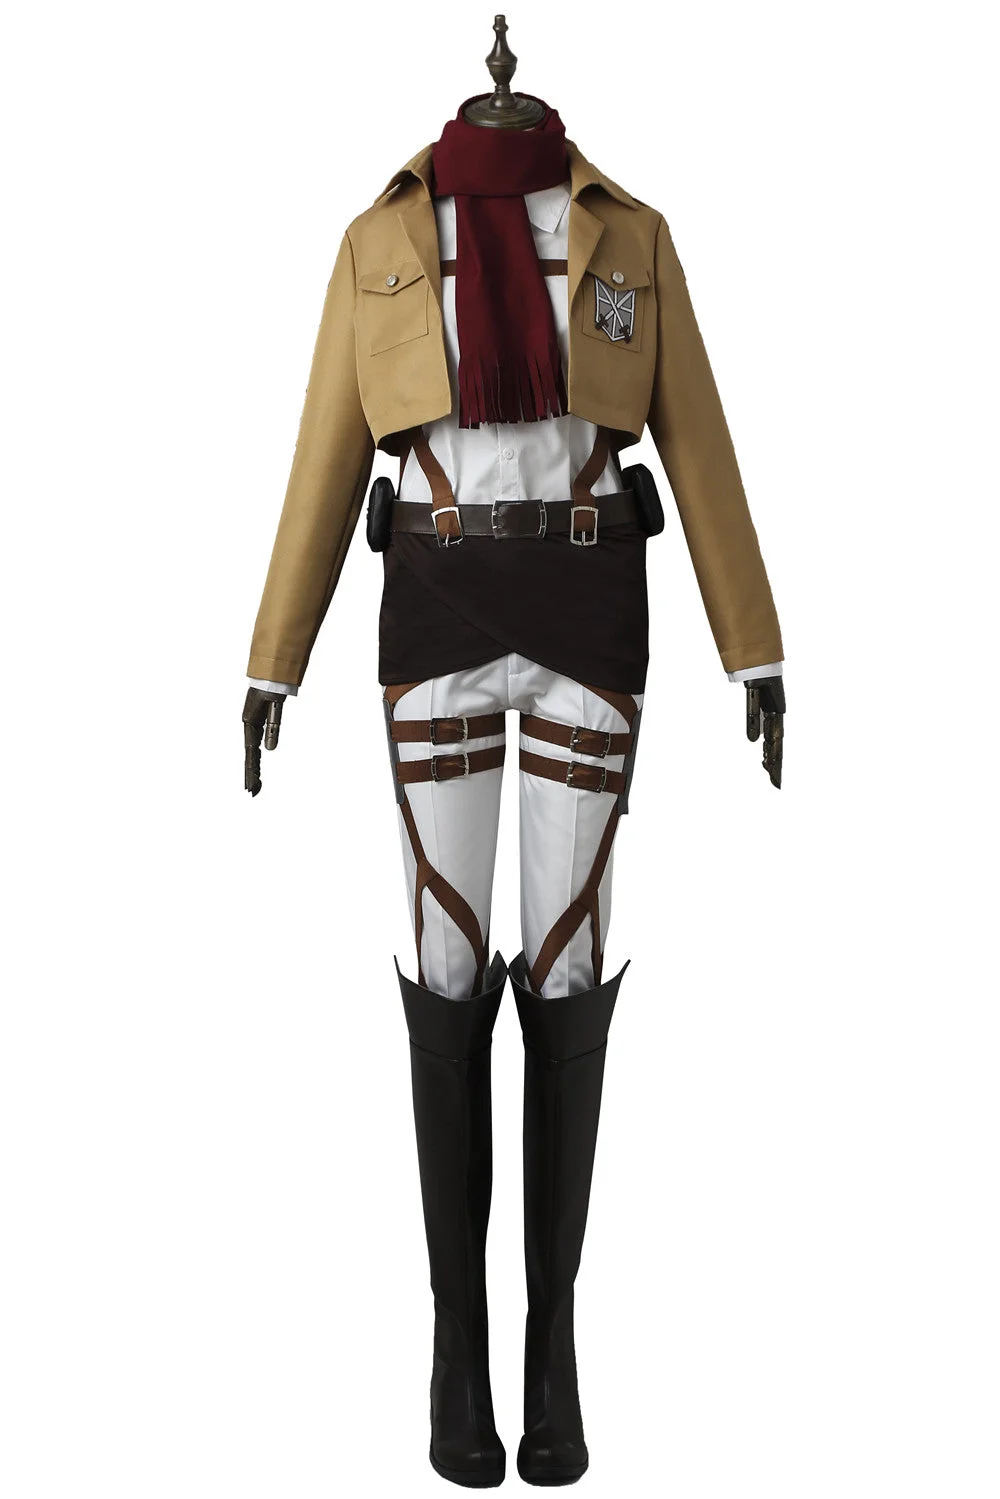 Shingeki no Kyojin Mikasa Akkaman 104th Cadet Corps Cosplay Costume